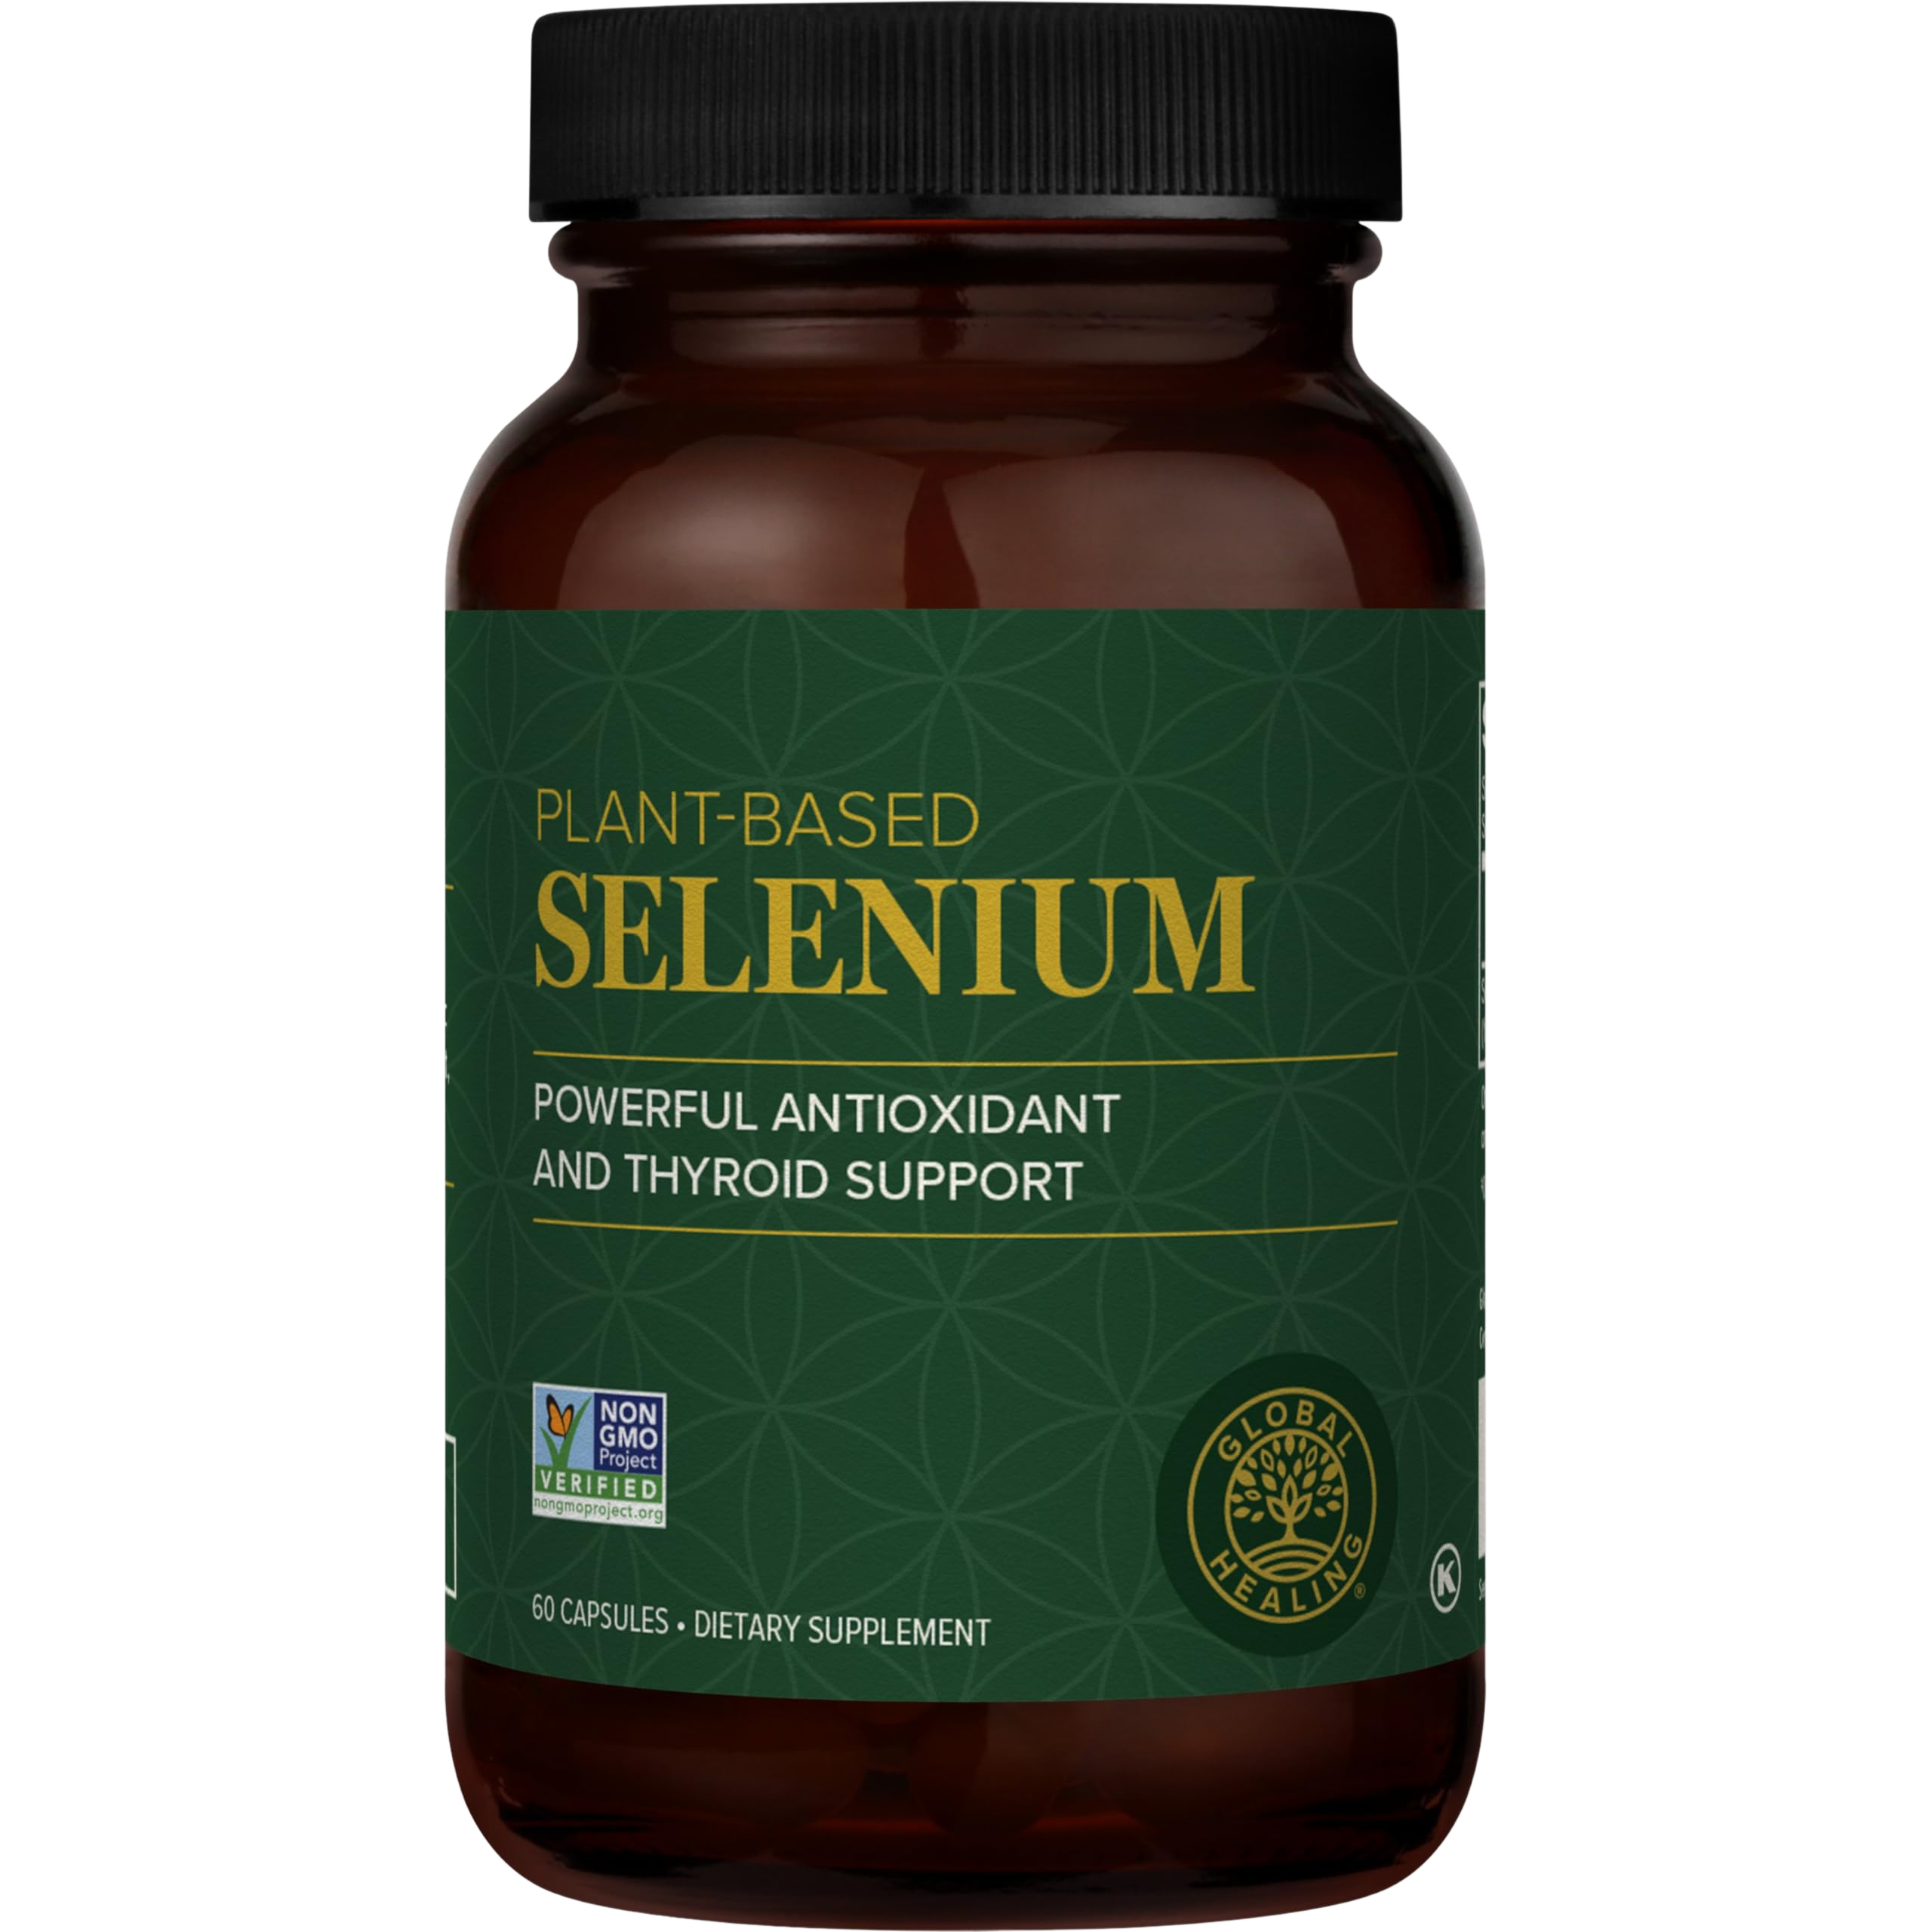 Global Healing Selenium Supplement